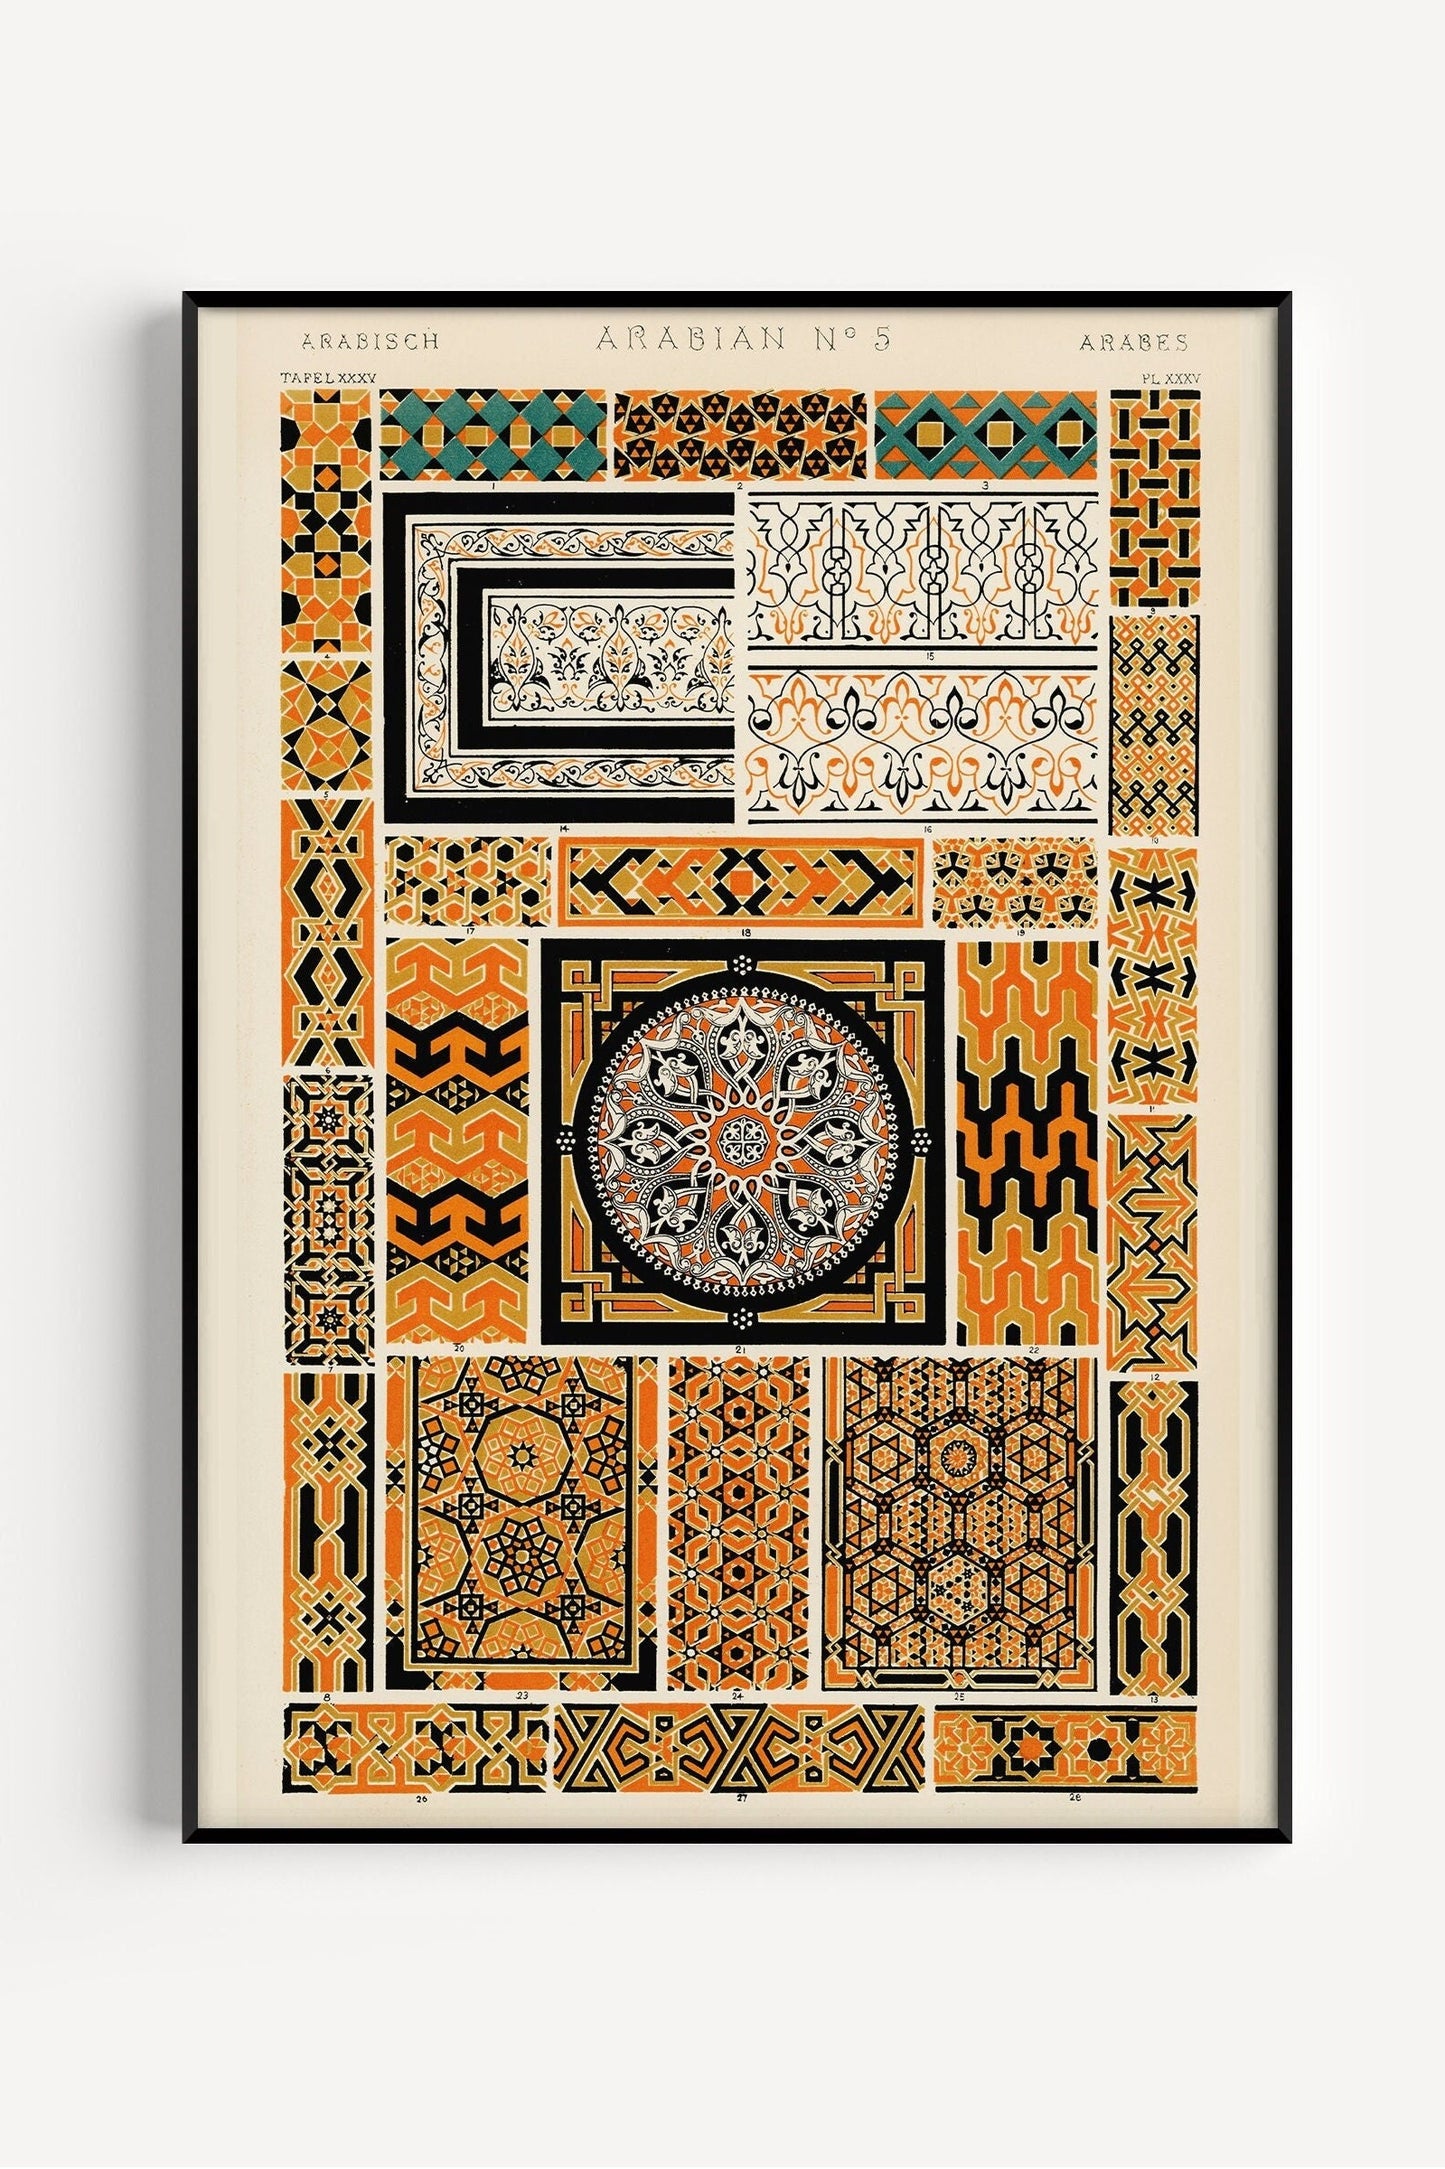 Framed Owen Jones Famous Pattern Ornament of Design Art Print Nouveau Arabesque Pattern Ready to hang Exhibition Poster Home Office Decor